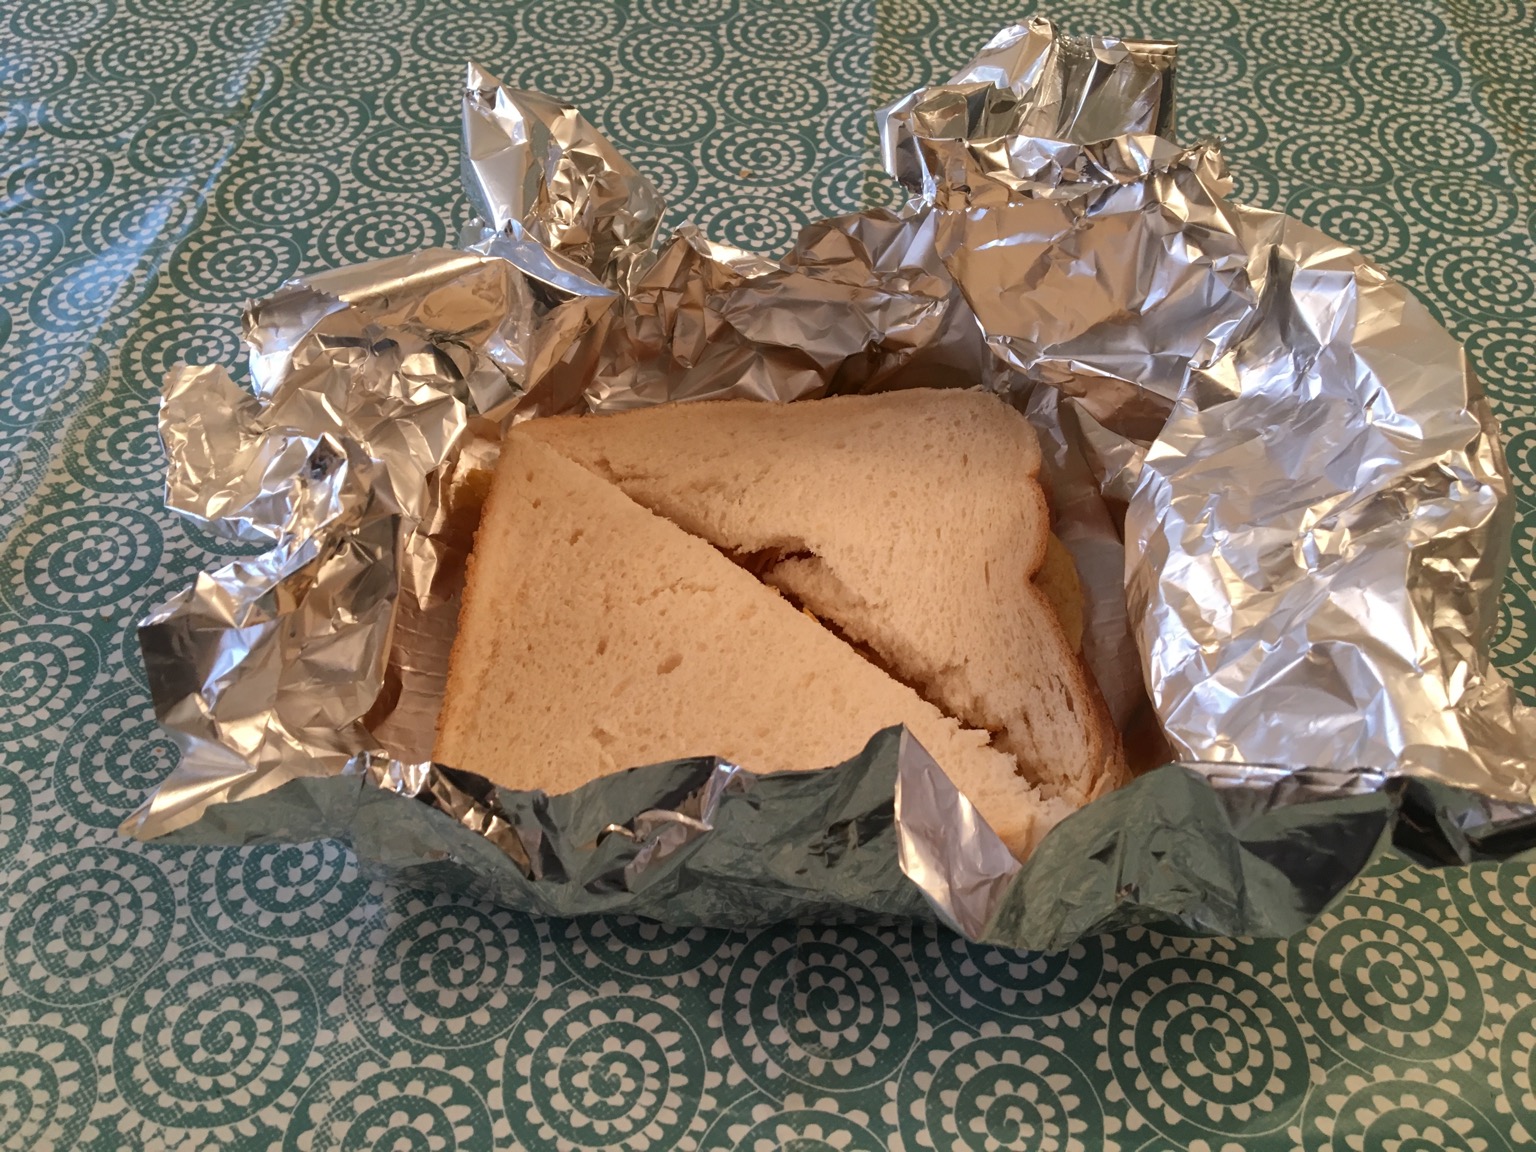 Crisp sandwich in foil, partially unwrapped